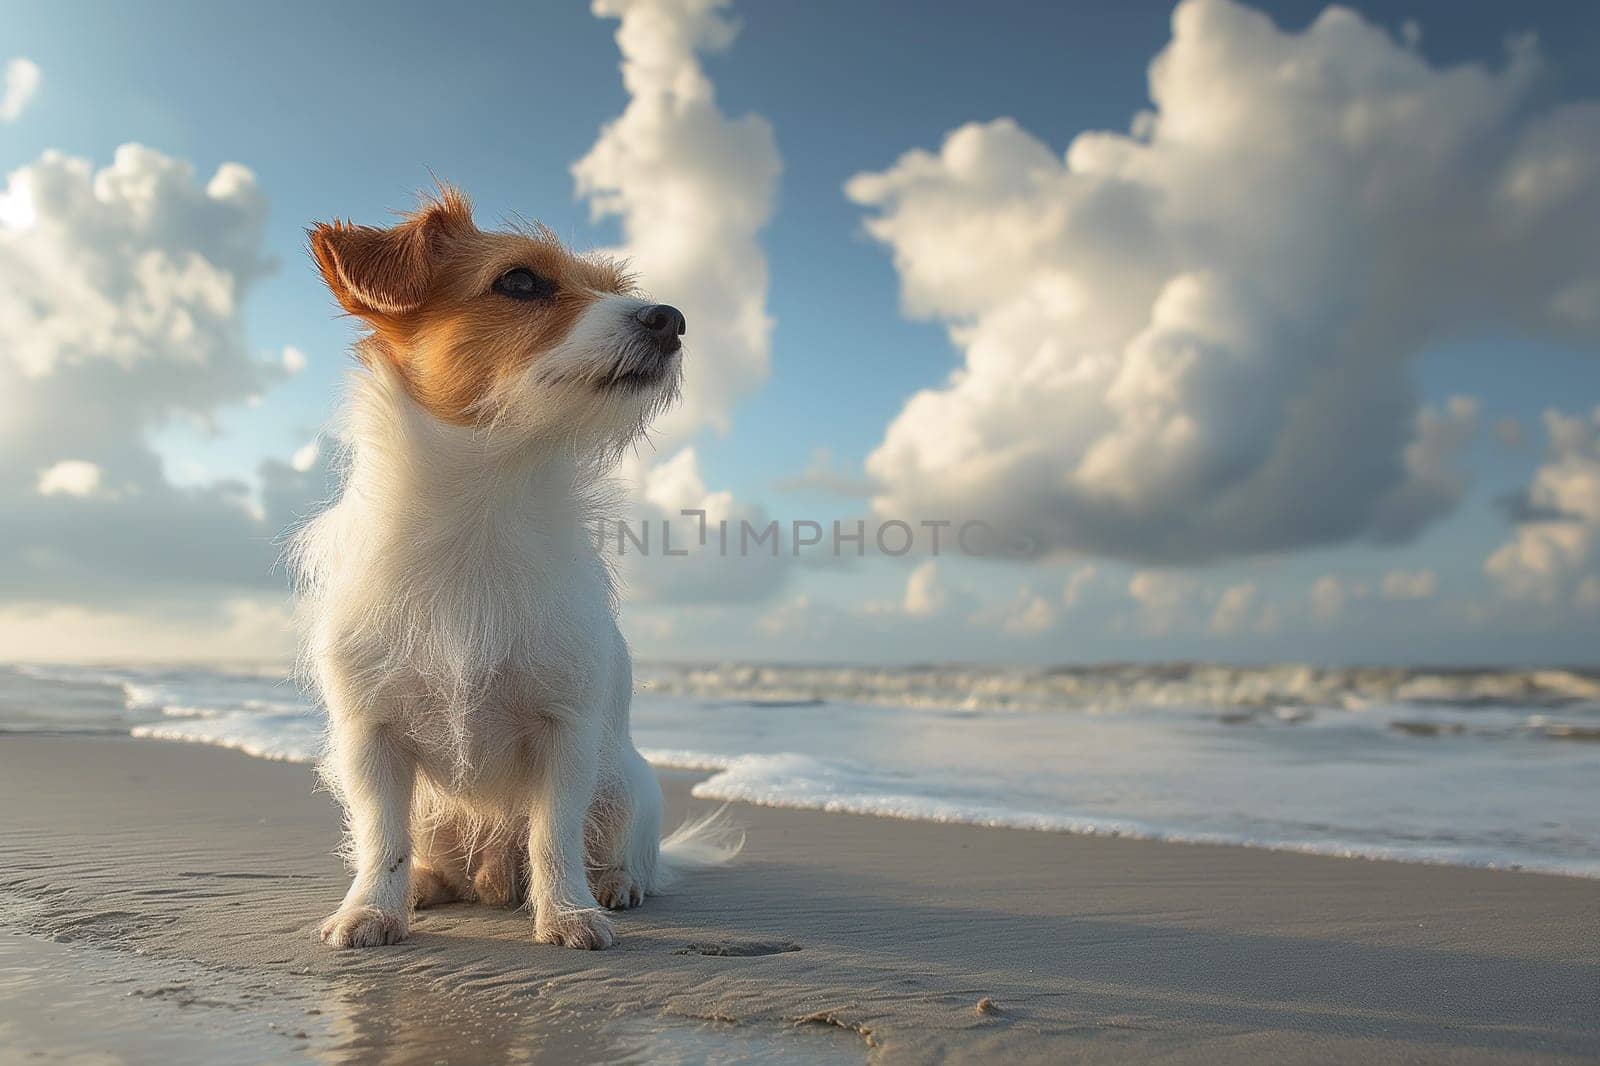 Happy dog enjoying a sunset on the beach